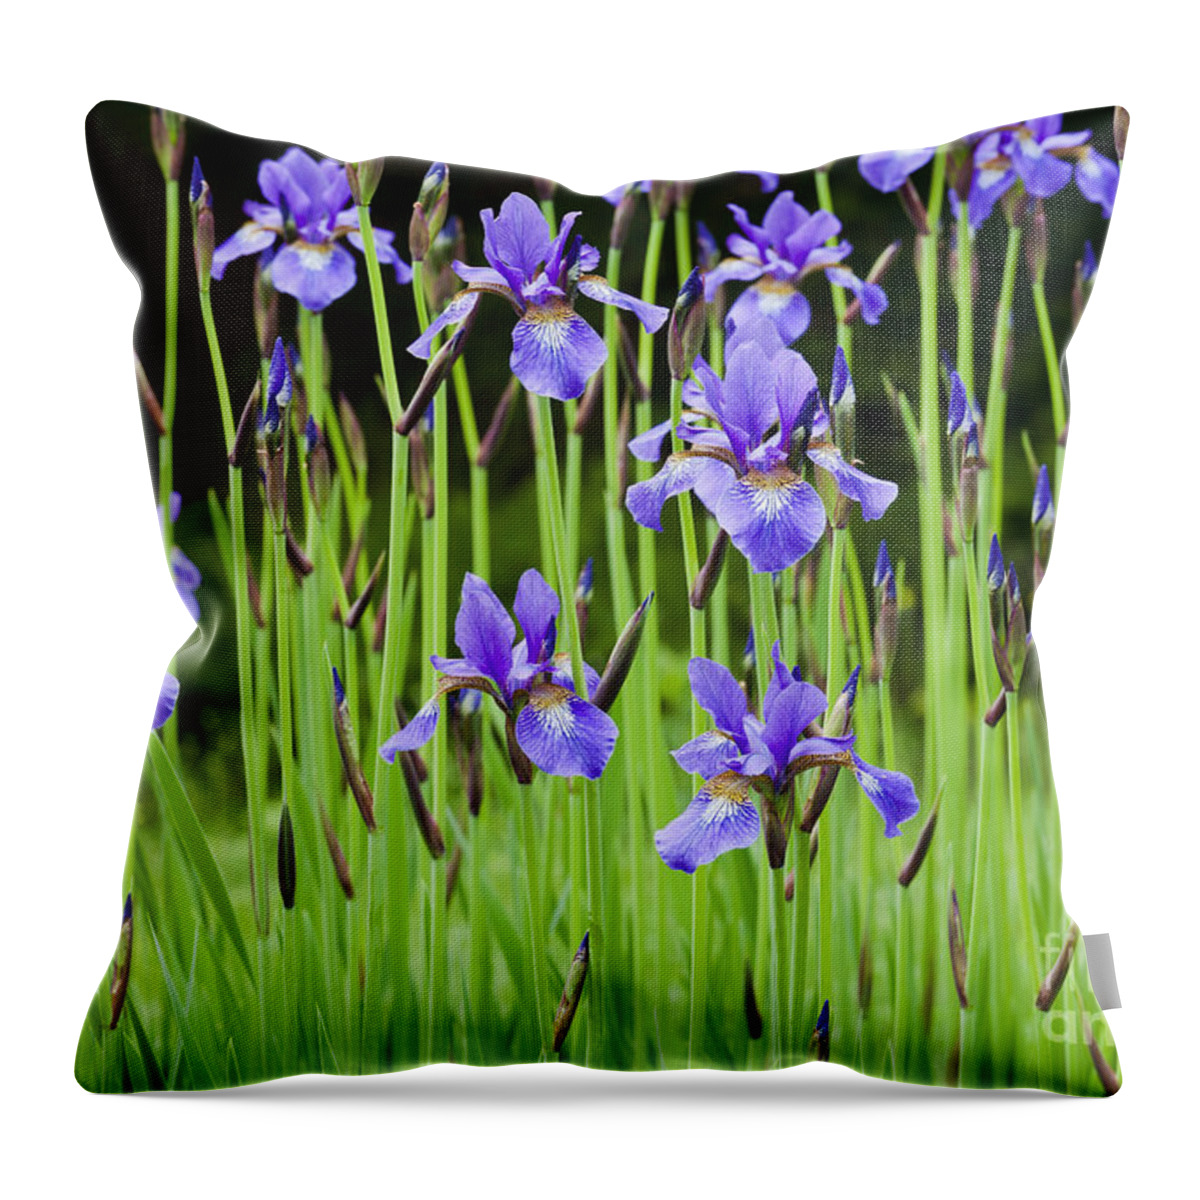 Iris Throw Pillow featuring the photograph Iris Garden by Alan L Graham